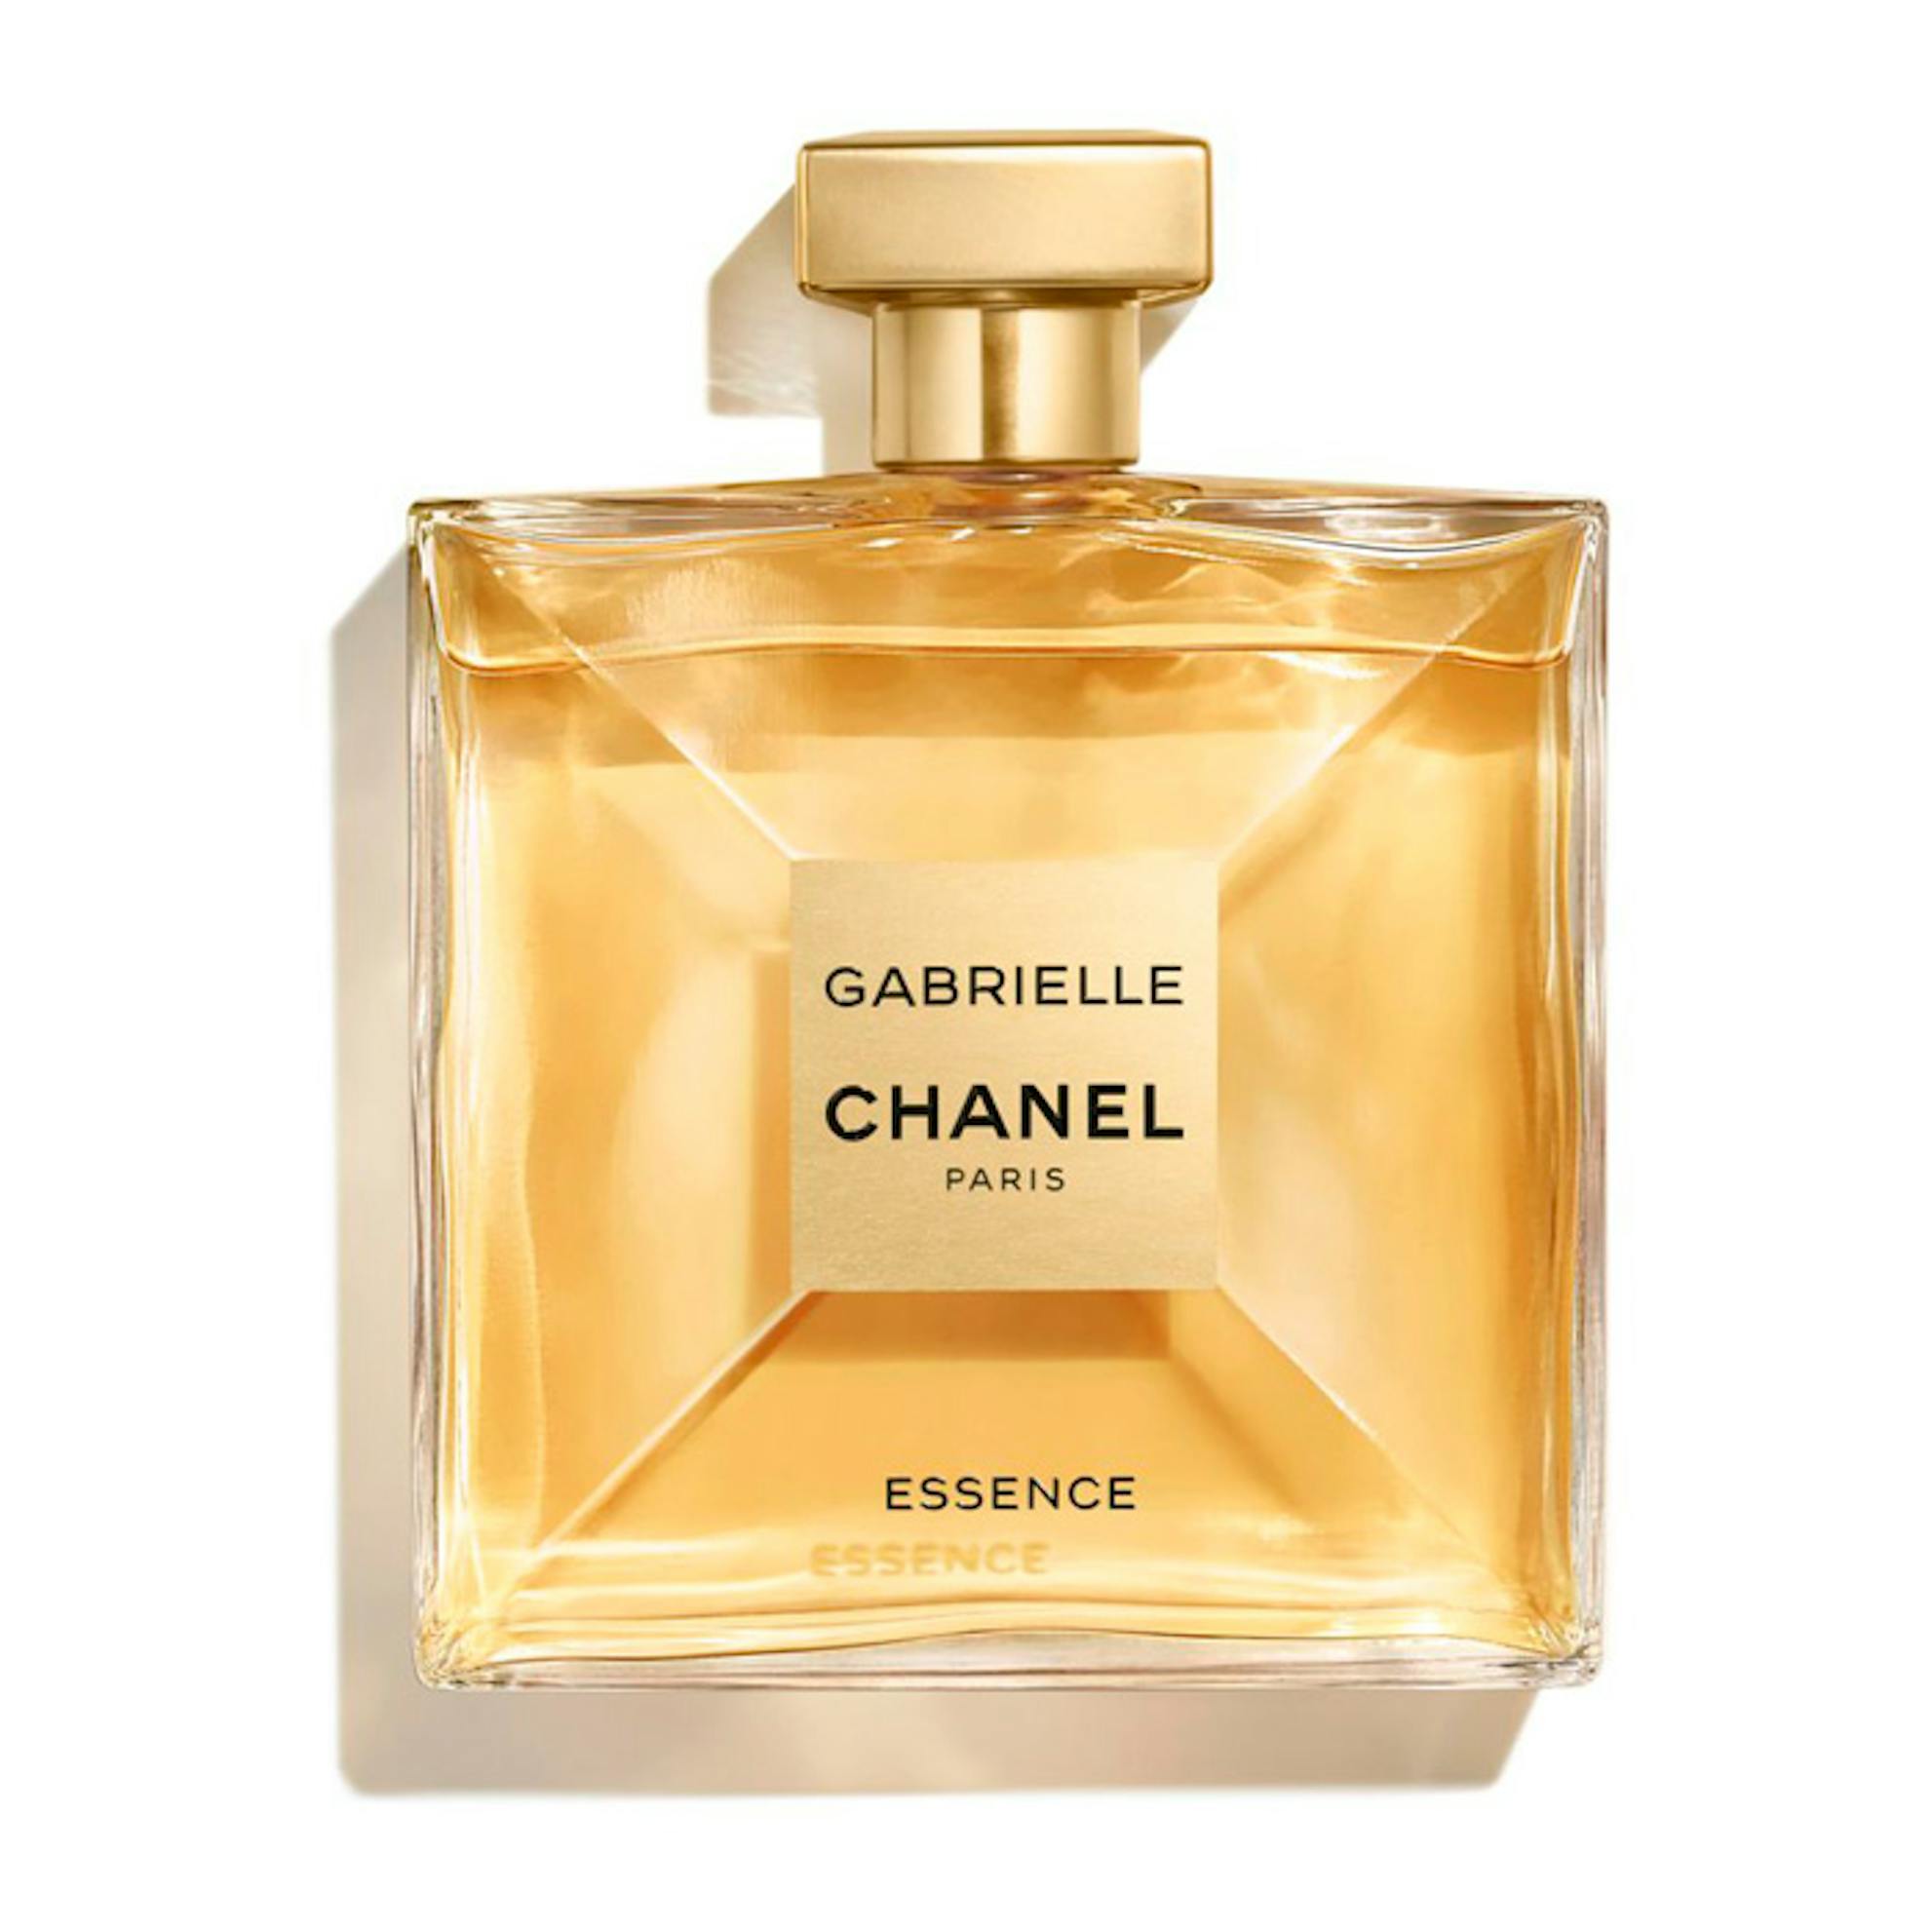 Chanel Gabrielle Chanel Essence Perfume for Women, 100ml